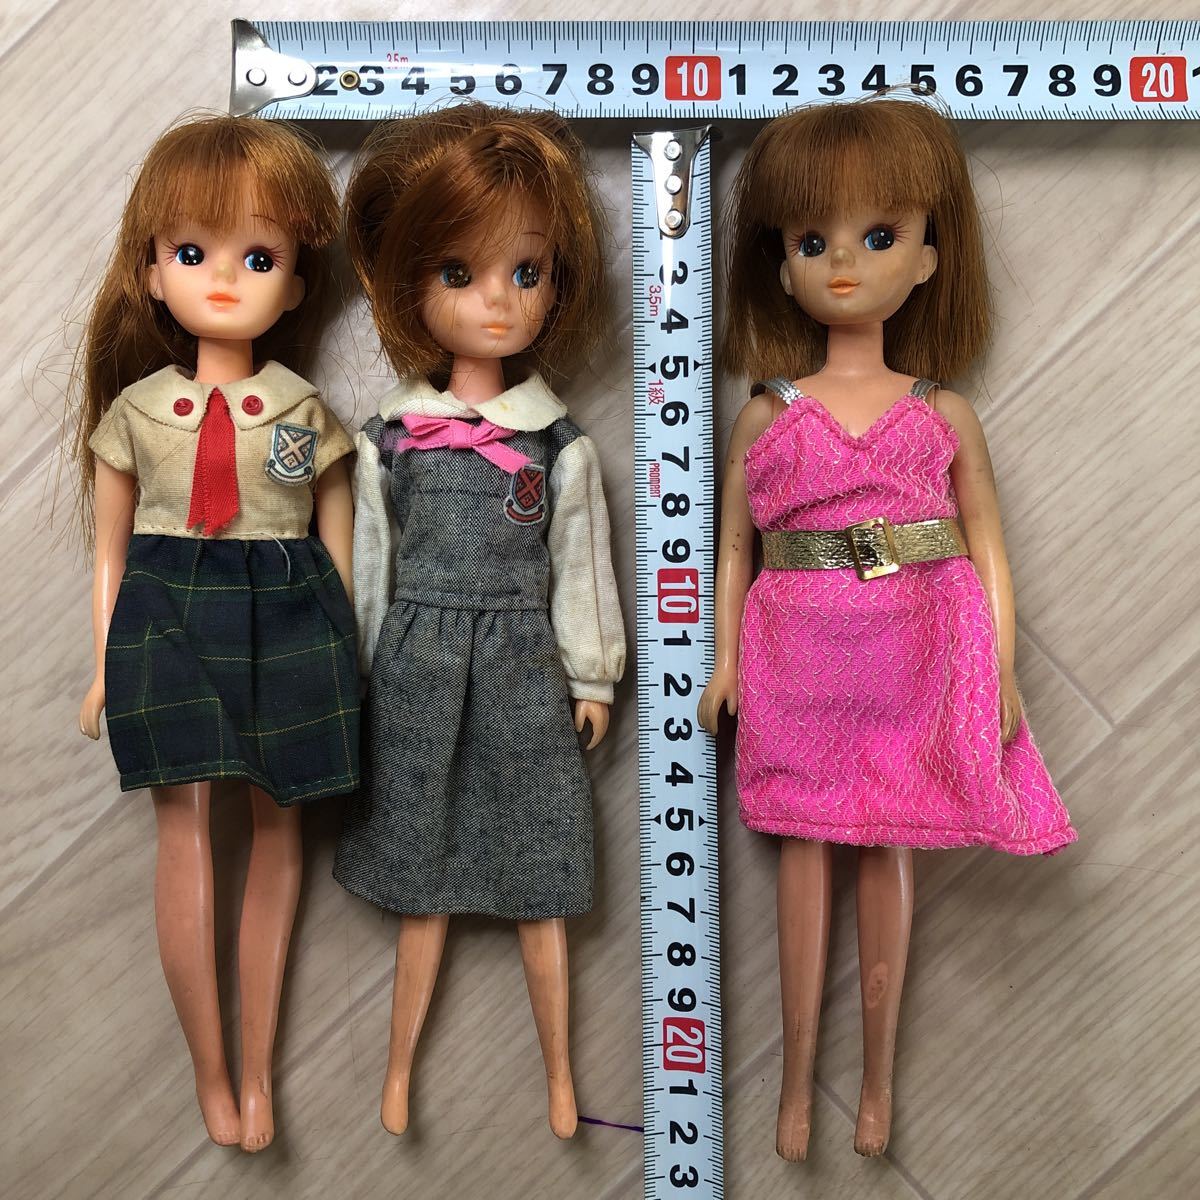 TAKARA JAPAN リカちゃん 5体 まとめて 昭和レトロ ビンテージ タカラ 当時物 着せ替え人形 お洋服 リカちゃん人形 (A1215)